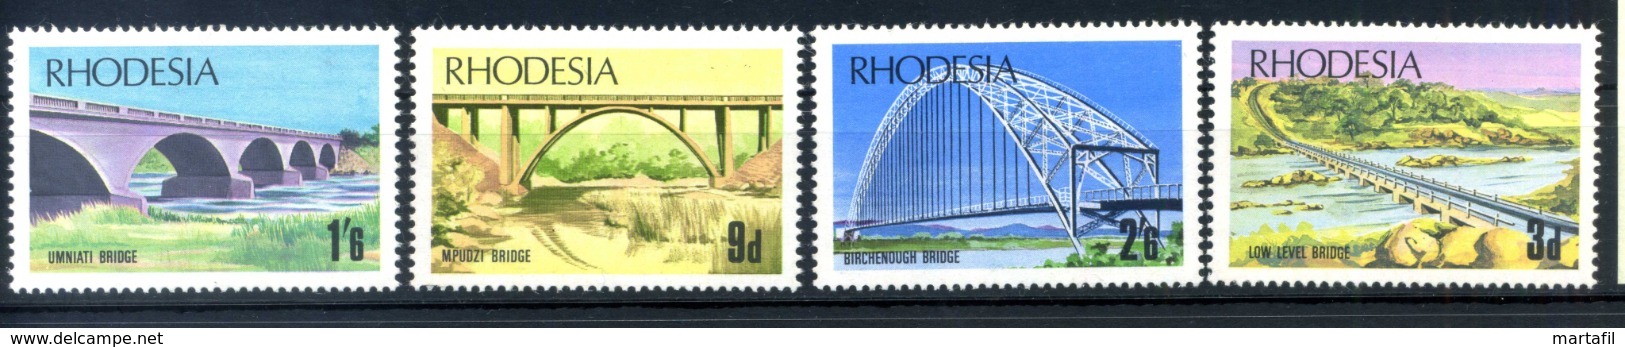 1969 RHODESIA SET MNH ** - Rhodesien (1964-1980)